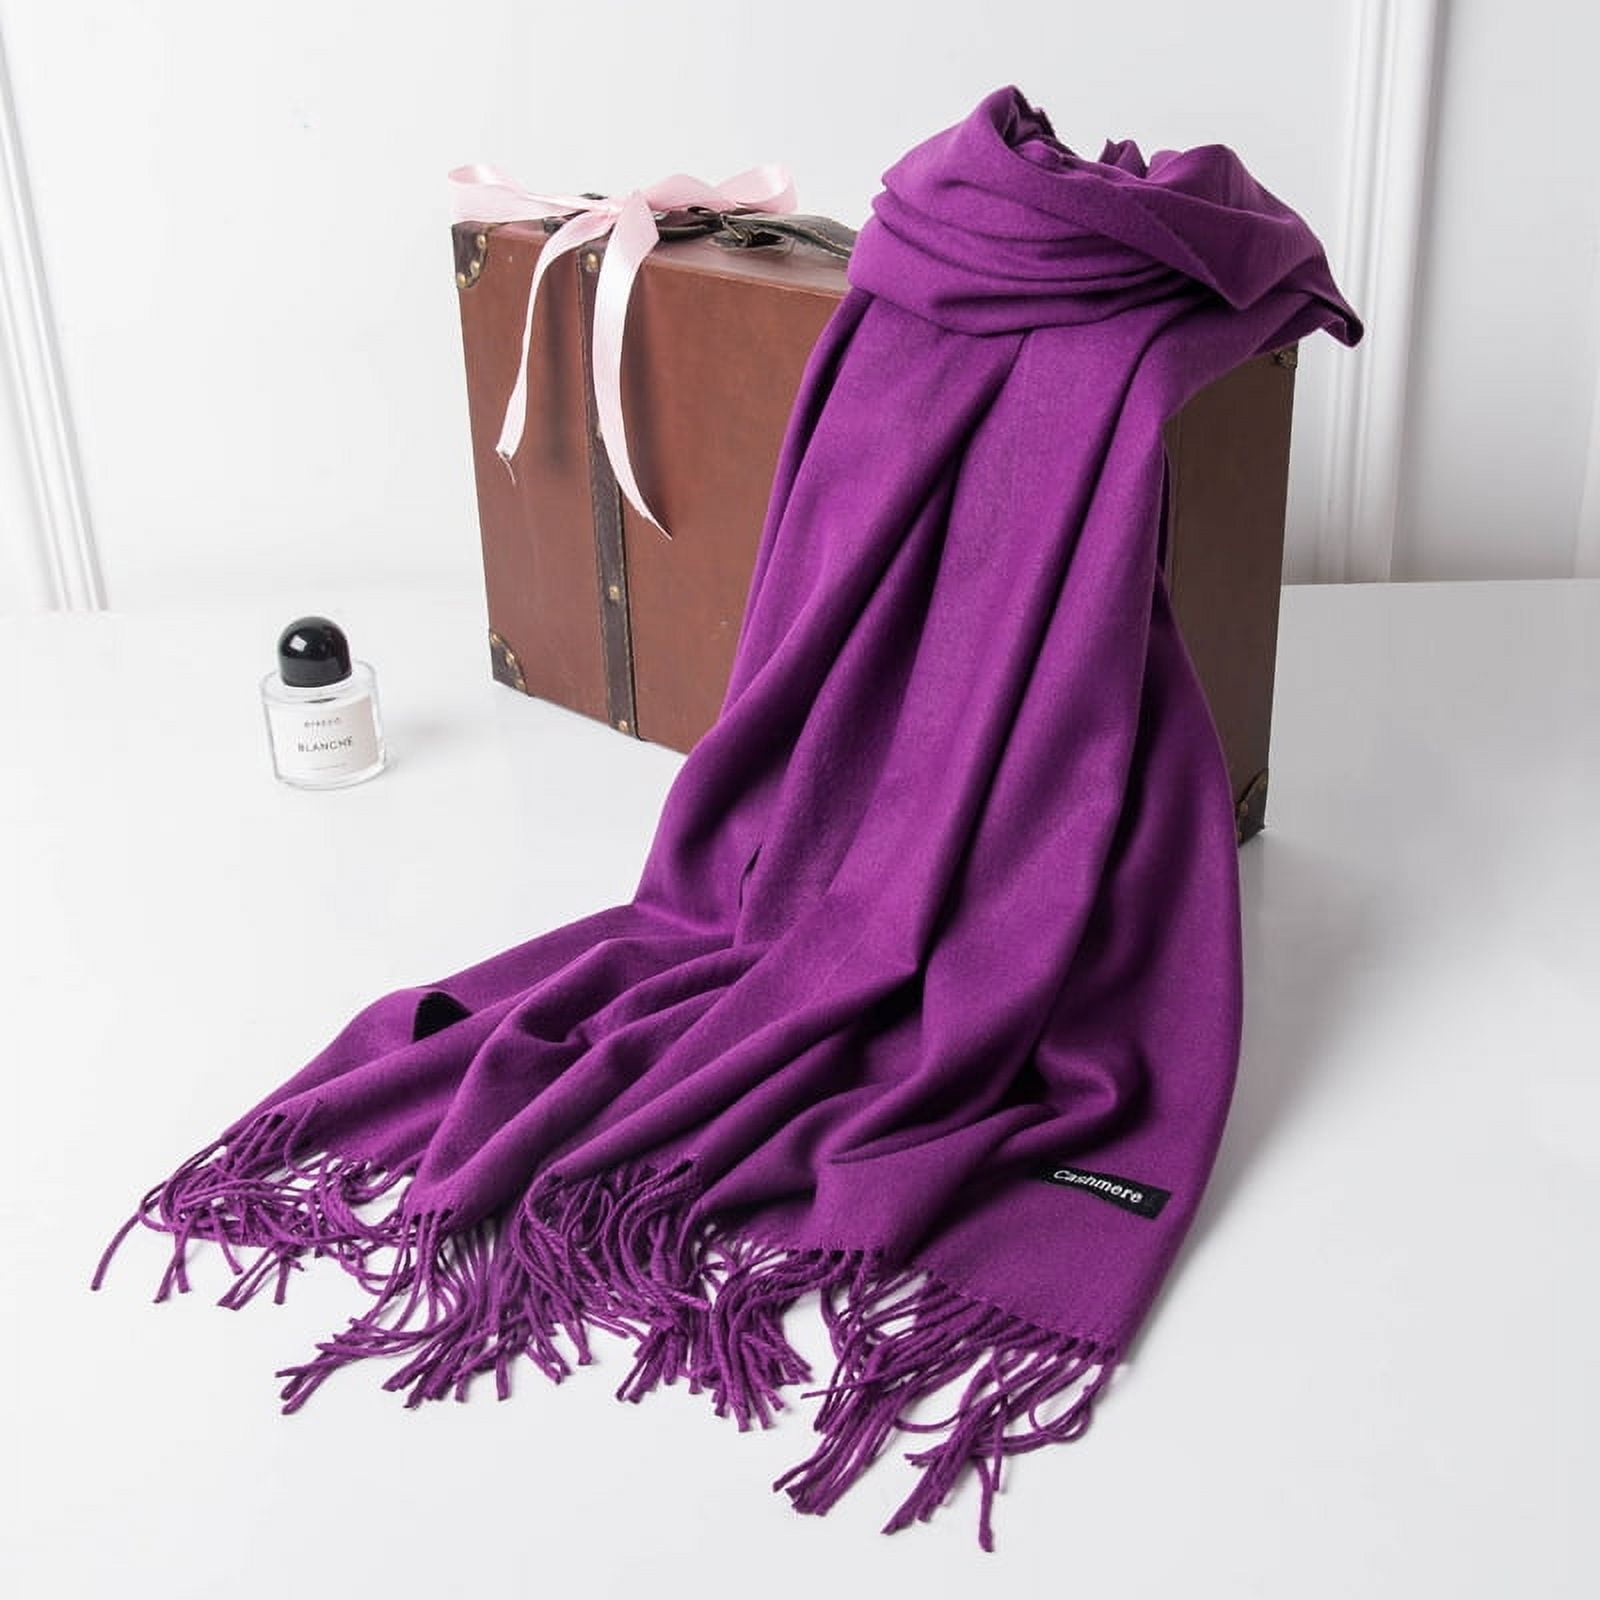 Womens Winter Scarf Cashmere Feel Pashmina Shawl Wraps Soft Warm Blanket  Scarves for Women 